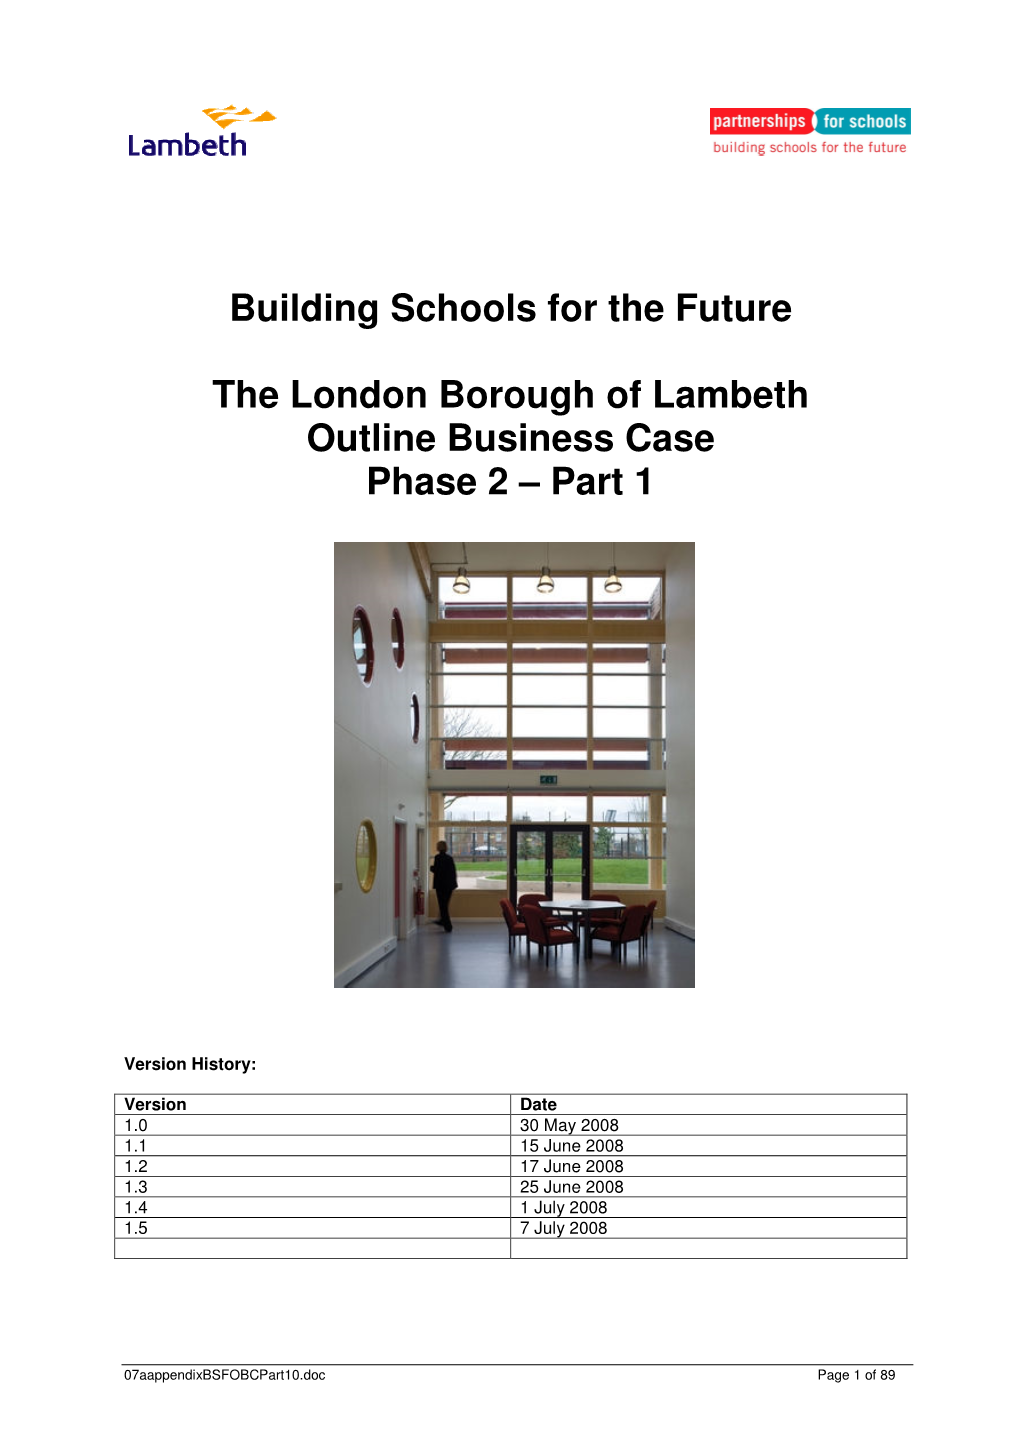 Building Schools for the Future the London Borough of Lambeth